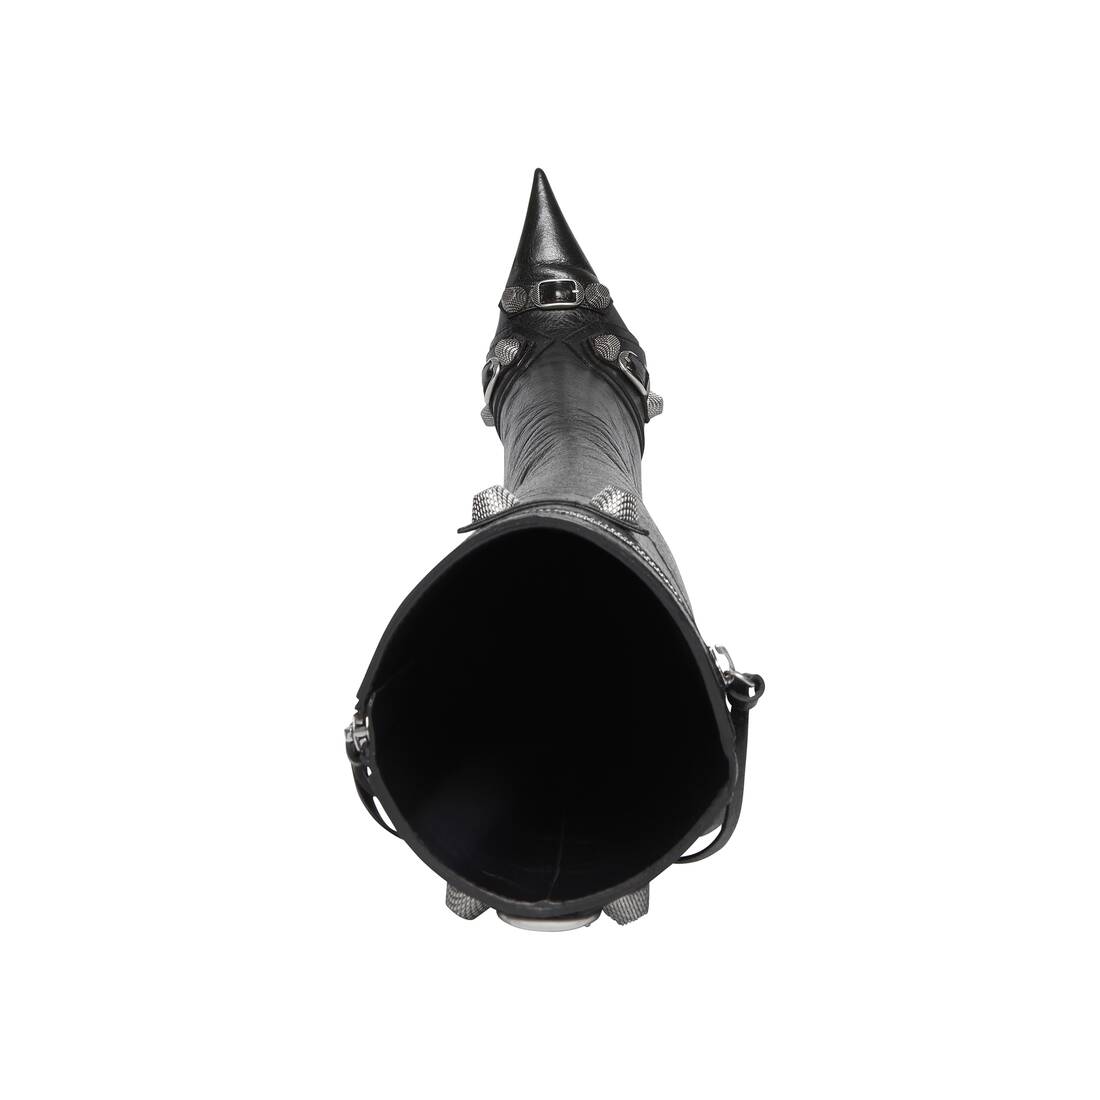 Women's Cagole 90mm Boot in Black | Balenciaga US